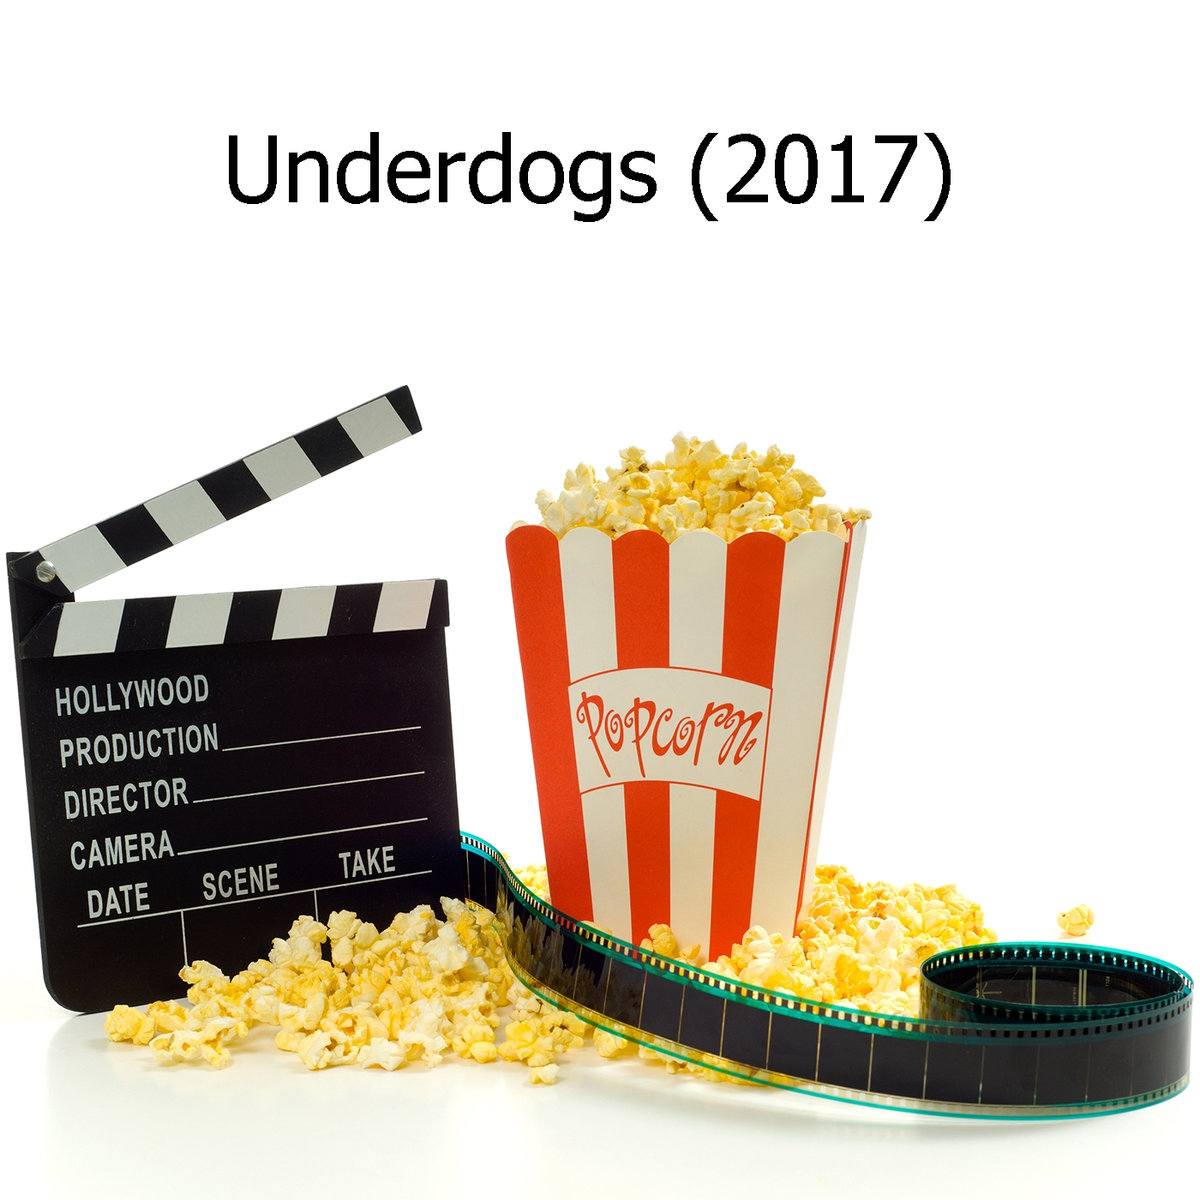 Underdogs animated movie torrent download